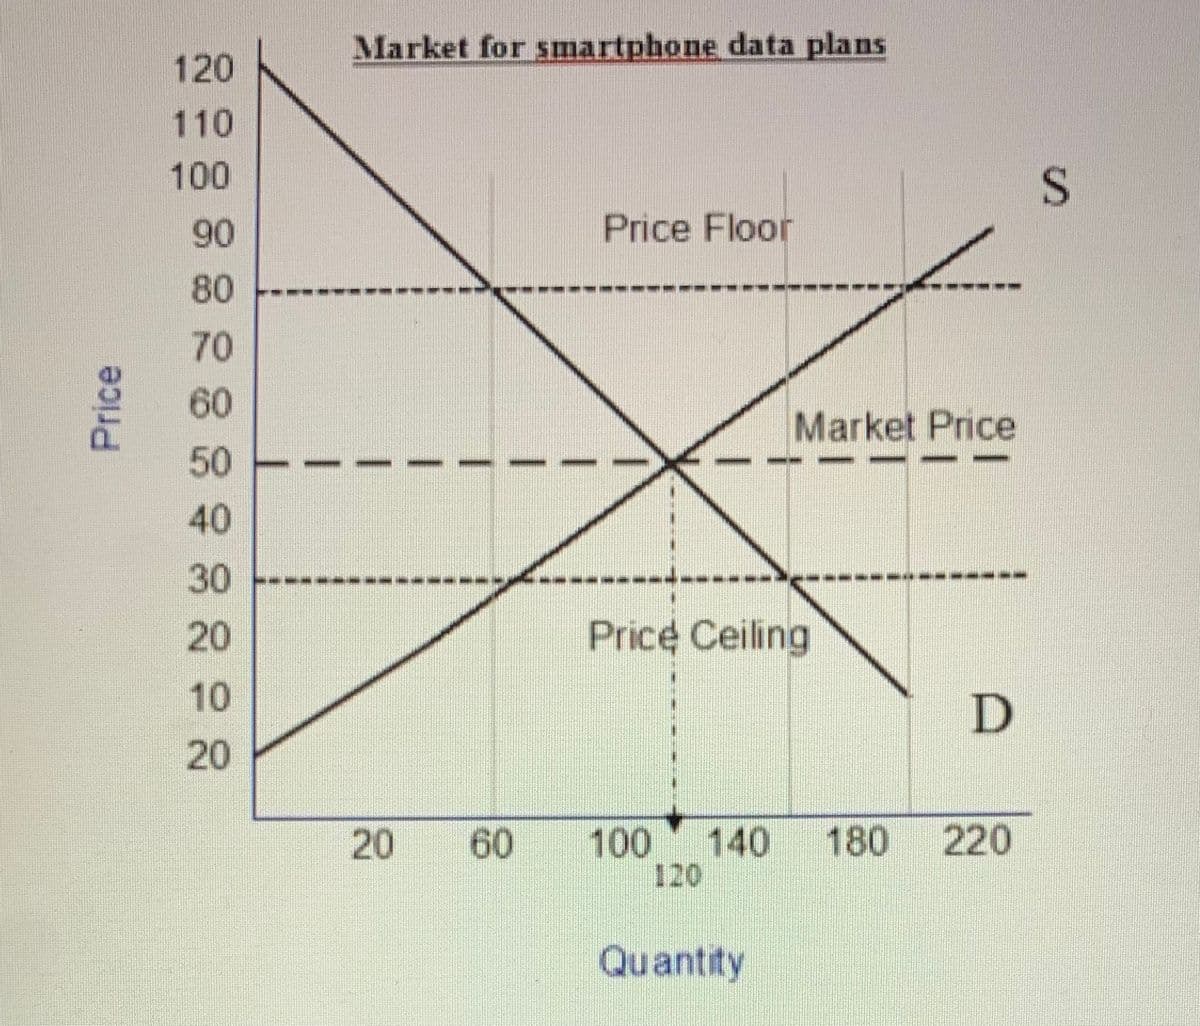 Market for smartphone data plans
120
110
100
90
Price Floor
80
70
60
Market Price
50
40
30
20
Price Ceiling
10
D
20
60
100
140
180 220
120
Quantity
Price
20
